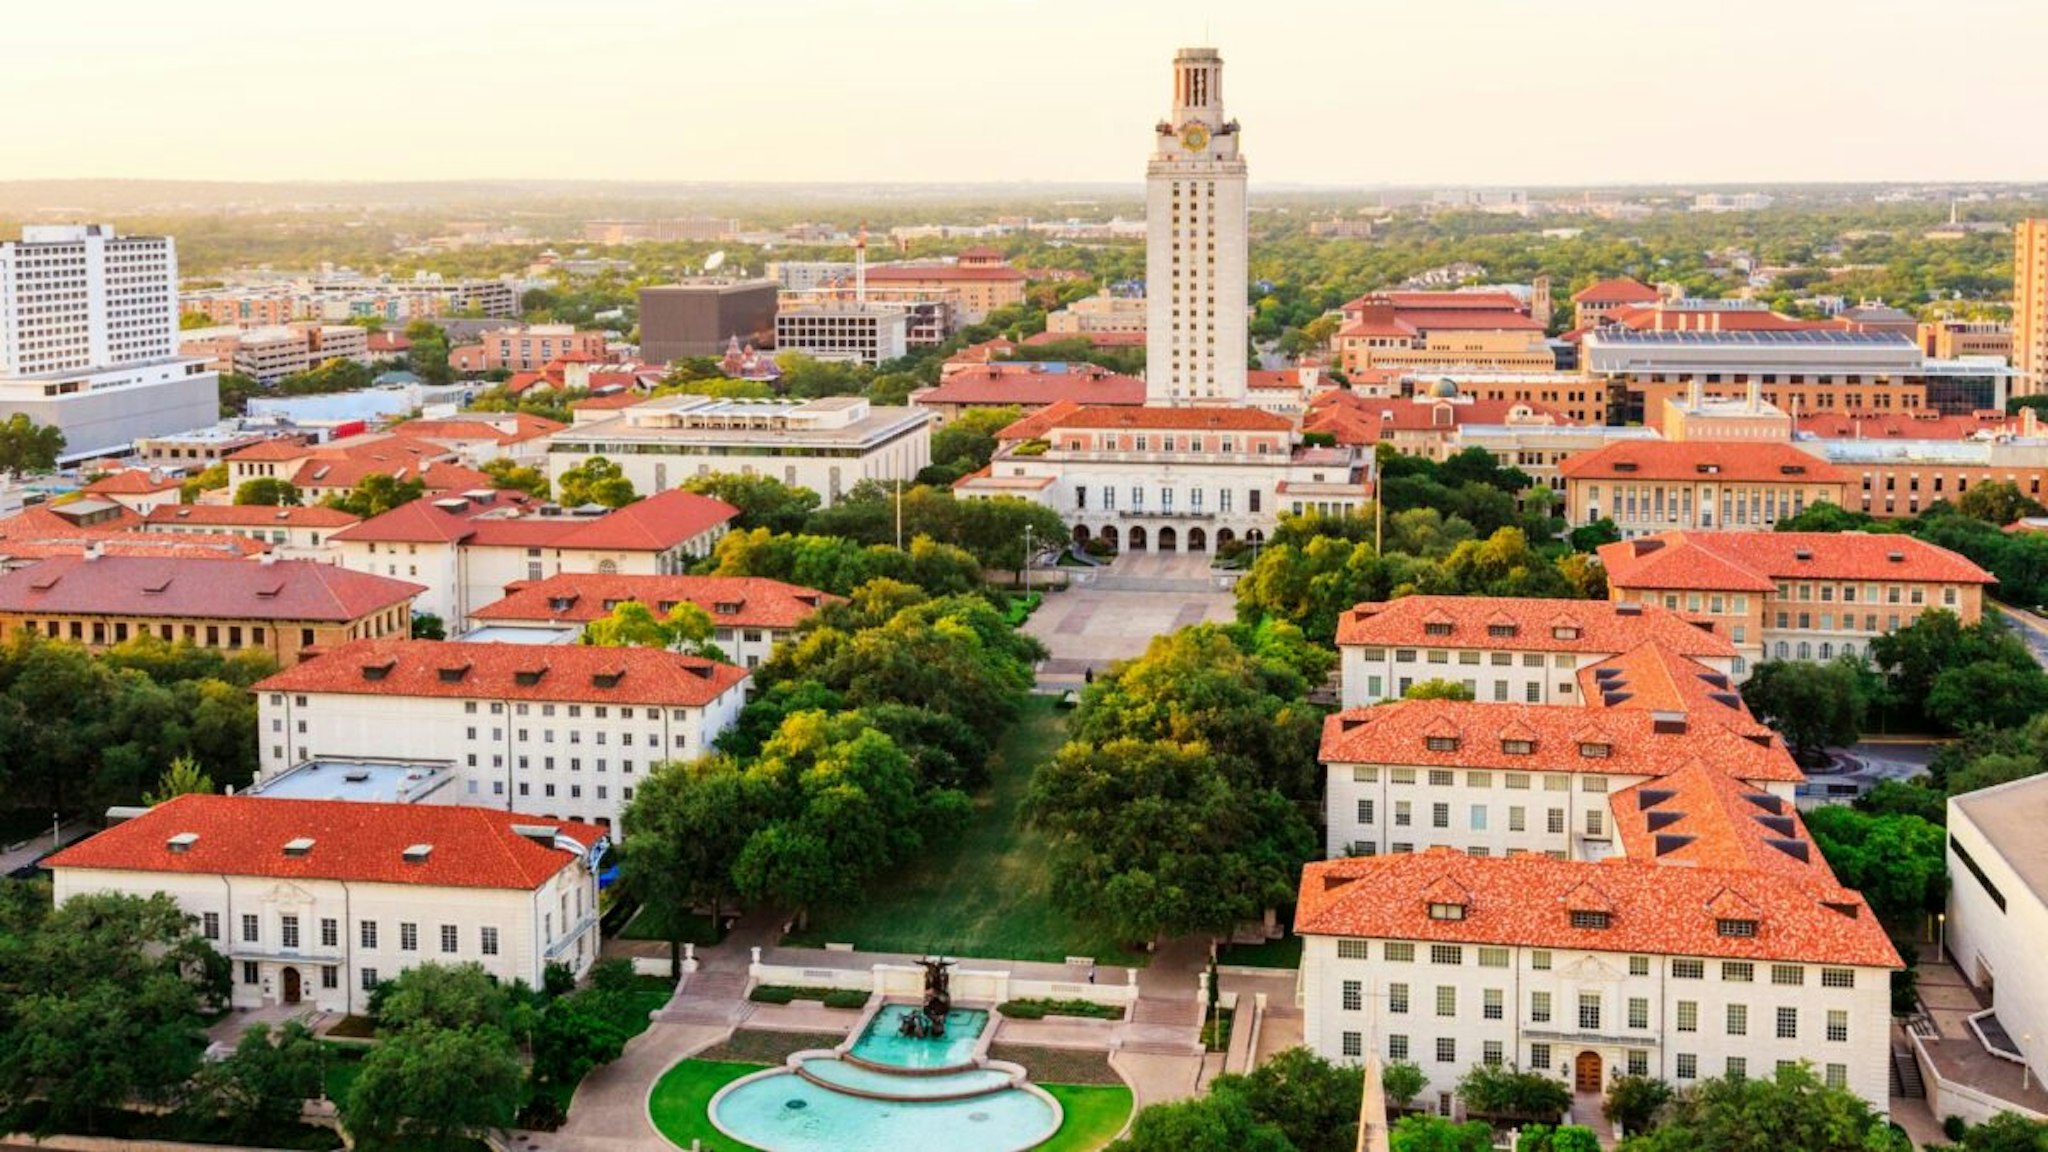 University of Texas Austin campus at sunset-dusk